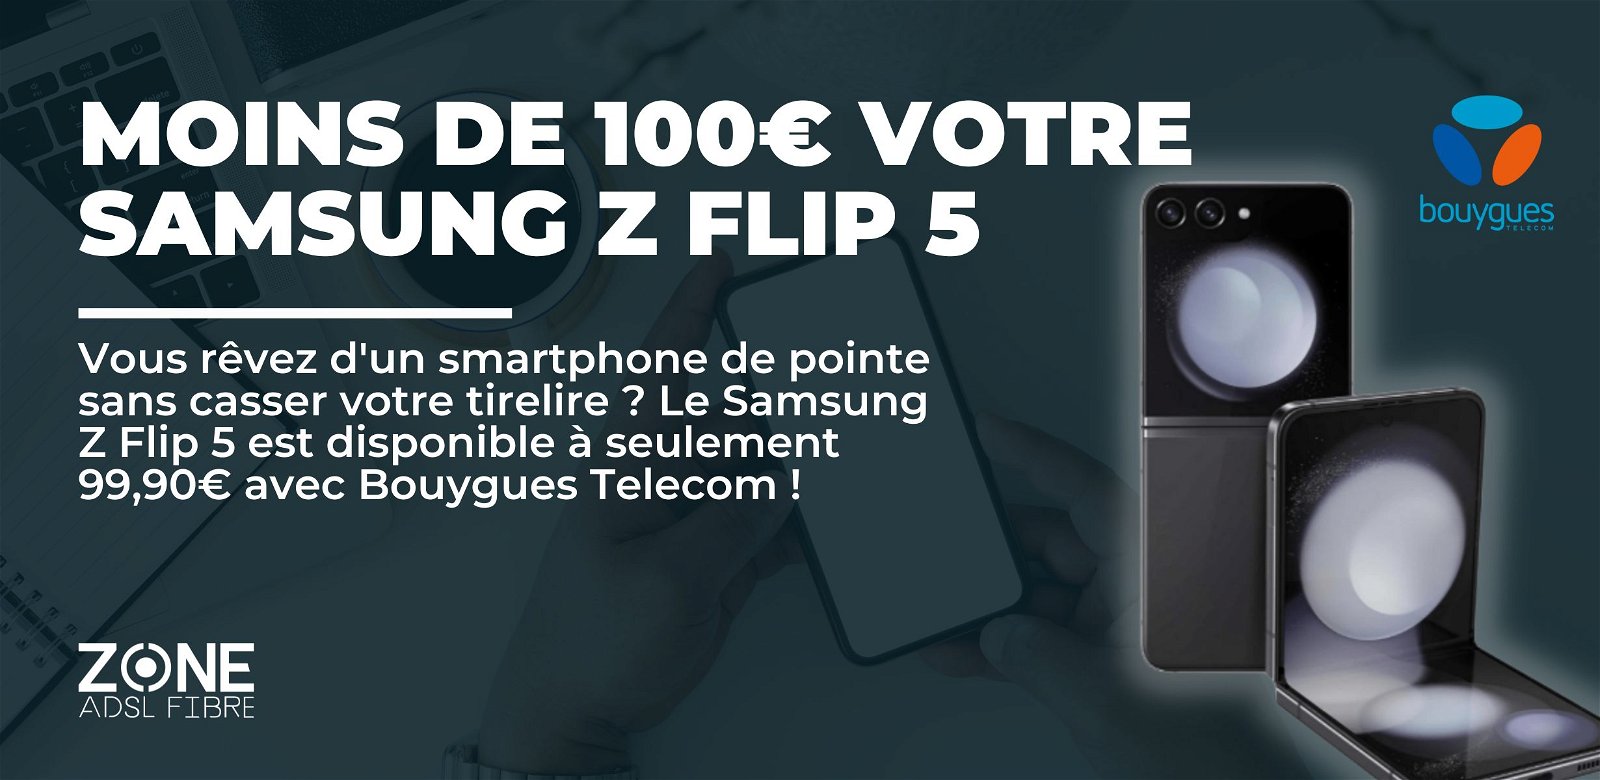 samsung z flip 5 promo avec Bouygues telecom